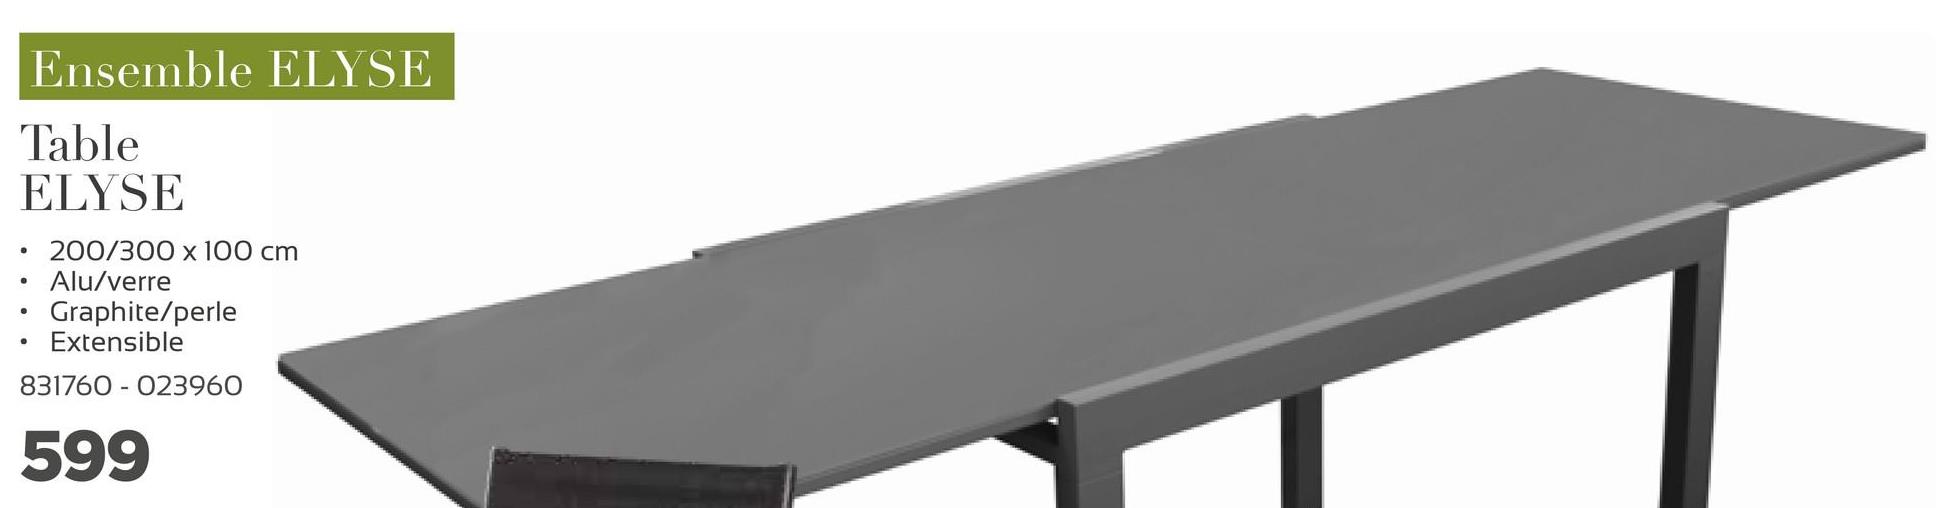 Ensemble ELYSE
Table
ELYSE
200/300 x 100 cm
Alu/verre
Graphite/perle
Extensible
831760 - 023960
599
